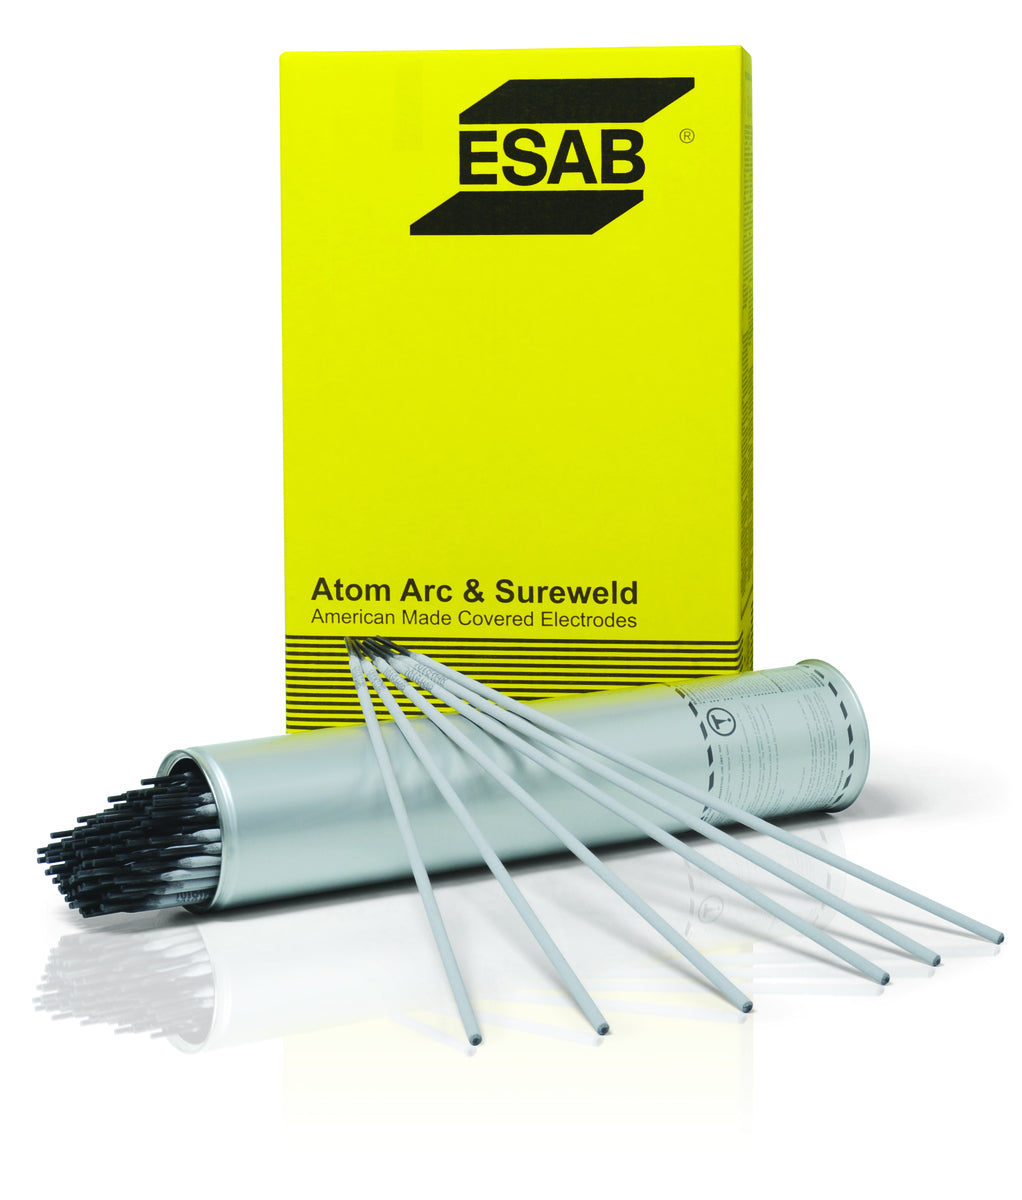 esab welding electrode - Buy esab welding electrode at Best Price